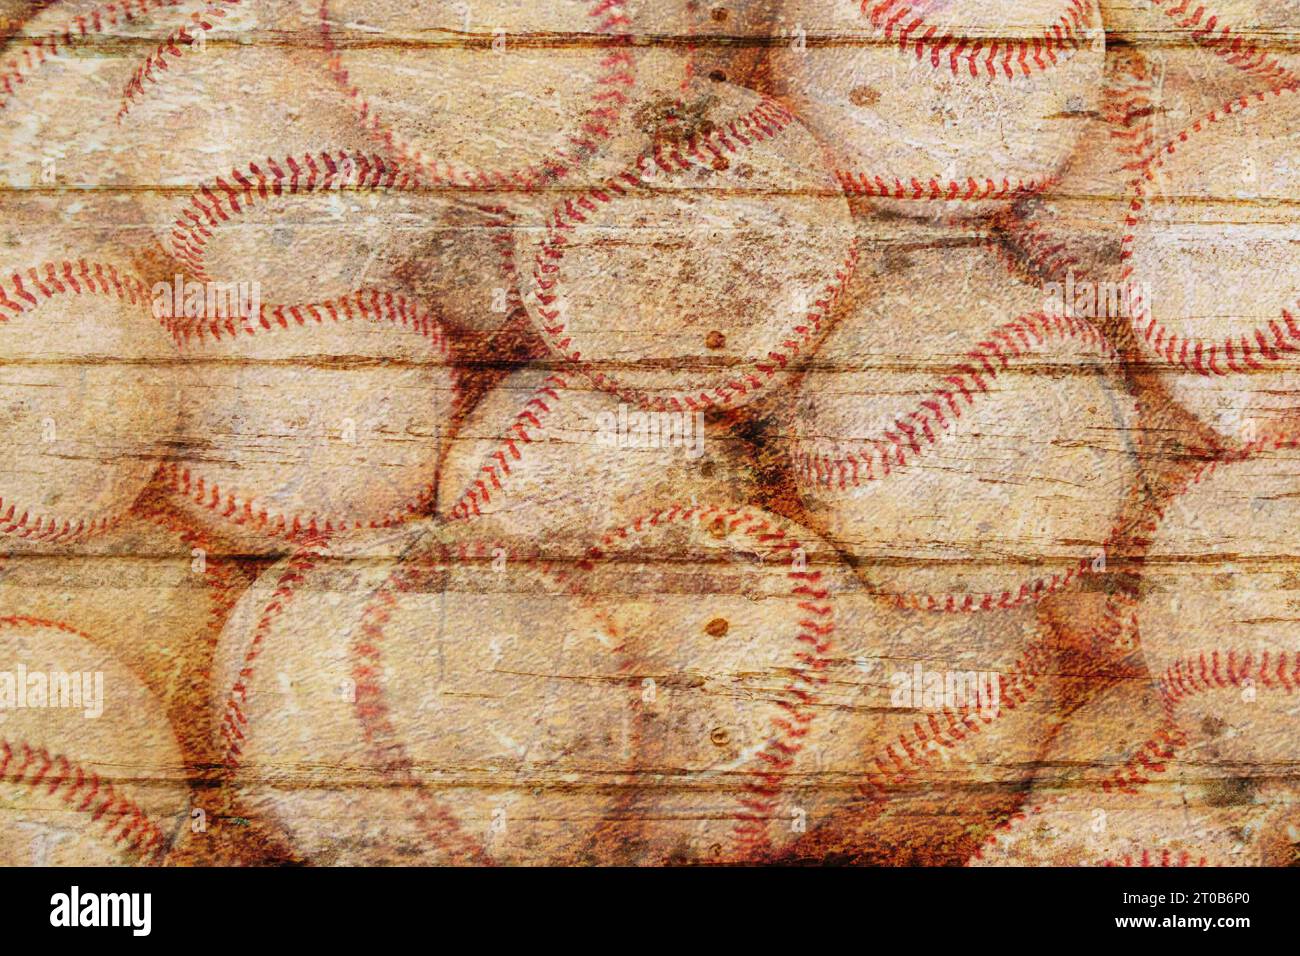 Baseballs. Stock Photo